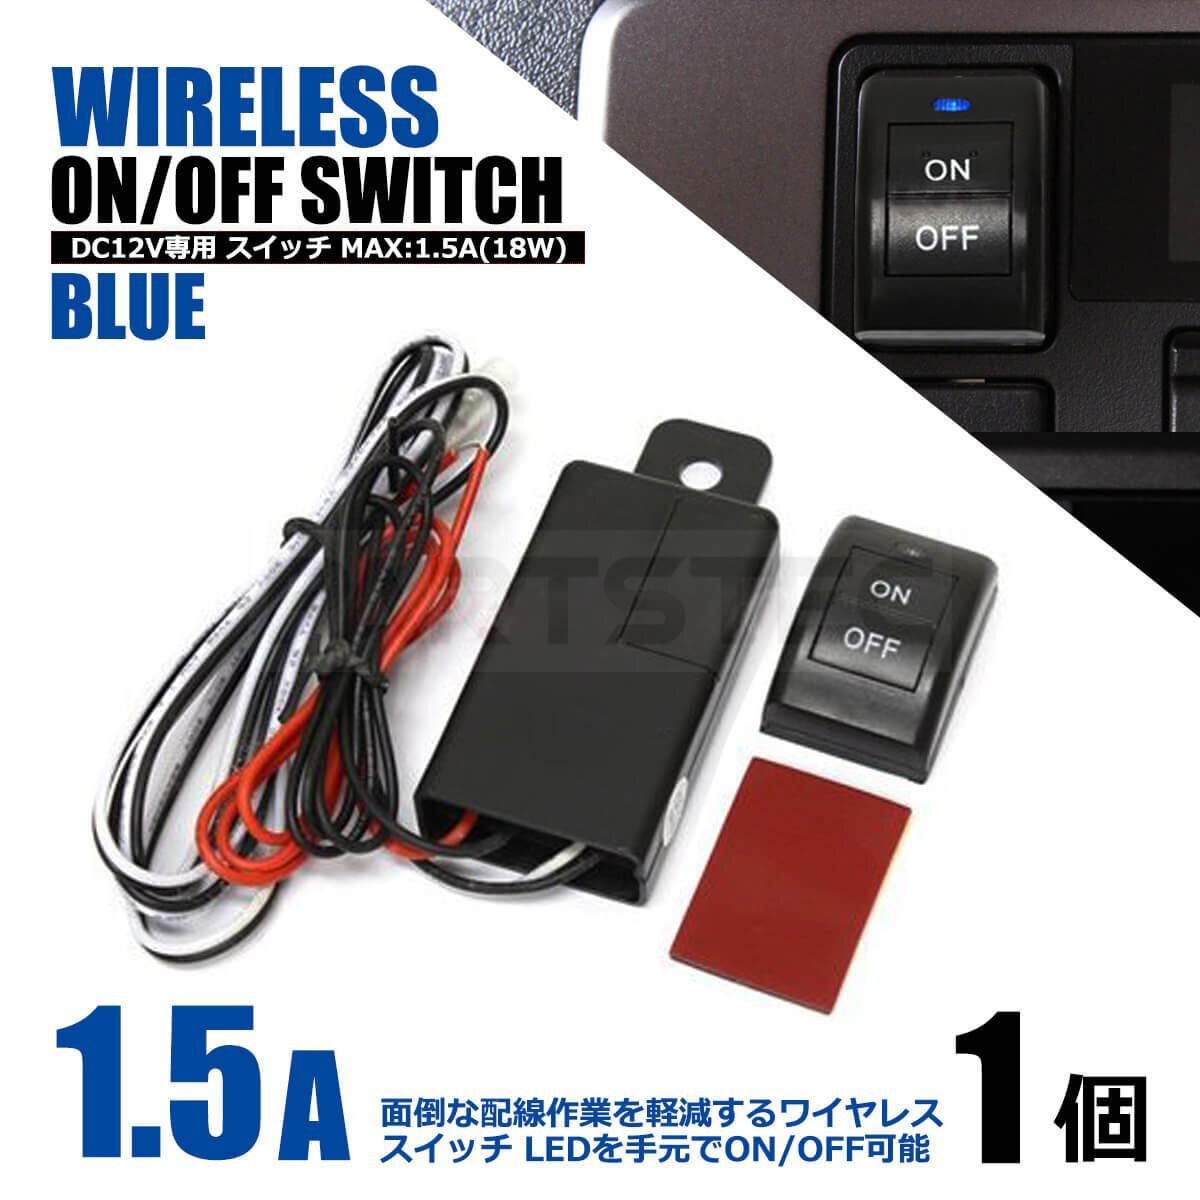 12V wireless wireless remote control switch kit LED product . foglamp daylight reflector LED blue lighting /28-141